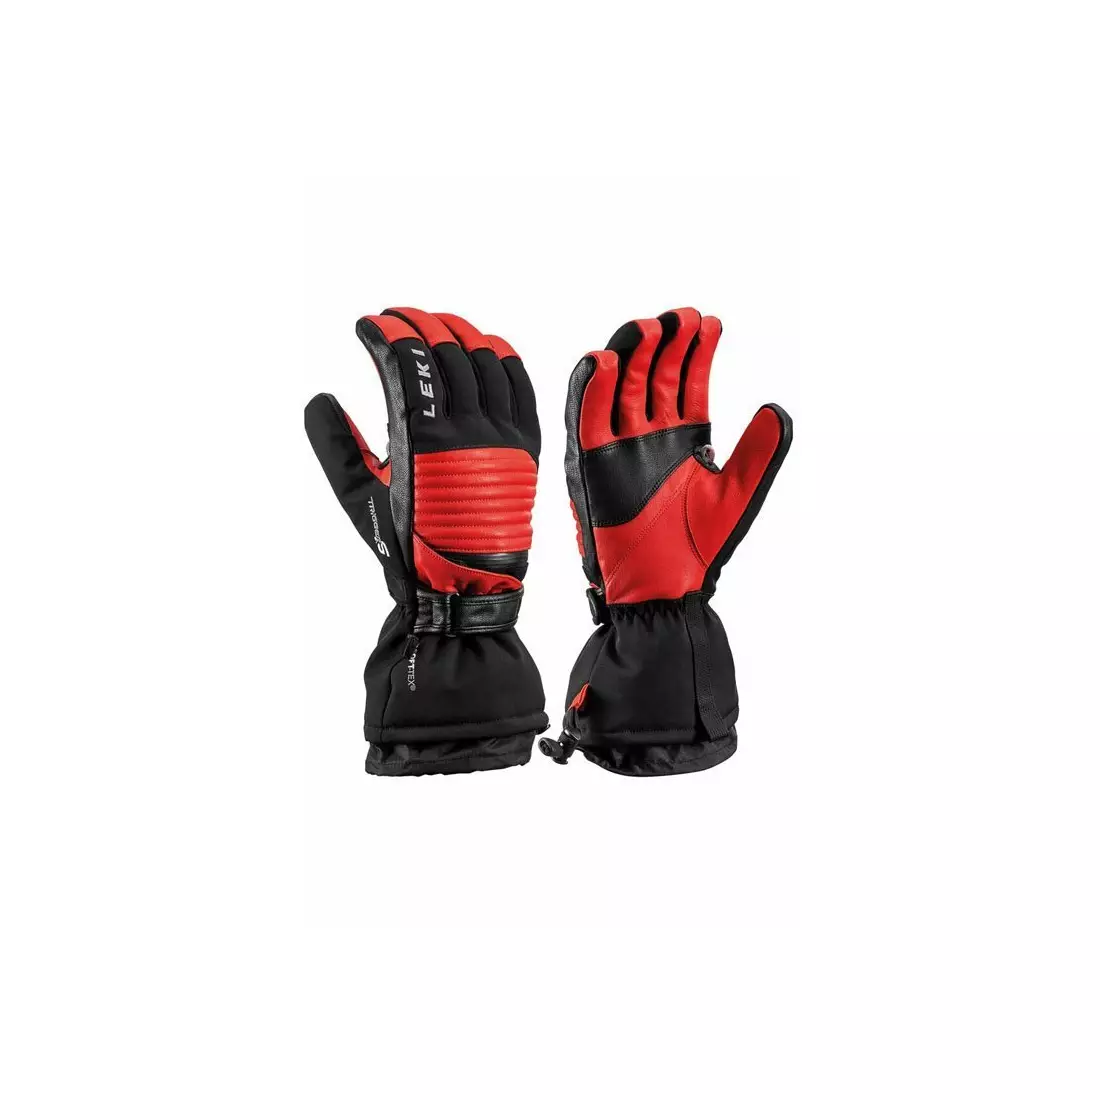 LEKI Women's ski gloves, Xplore XT S vintage, red-black, 643840303100